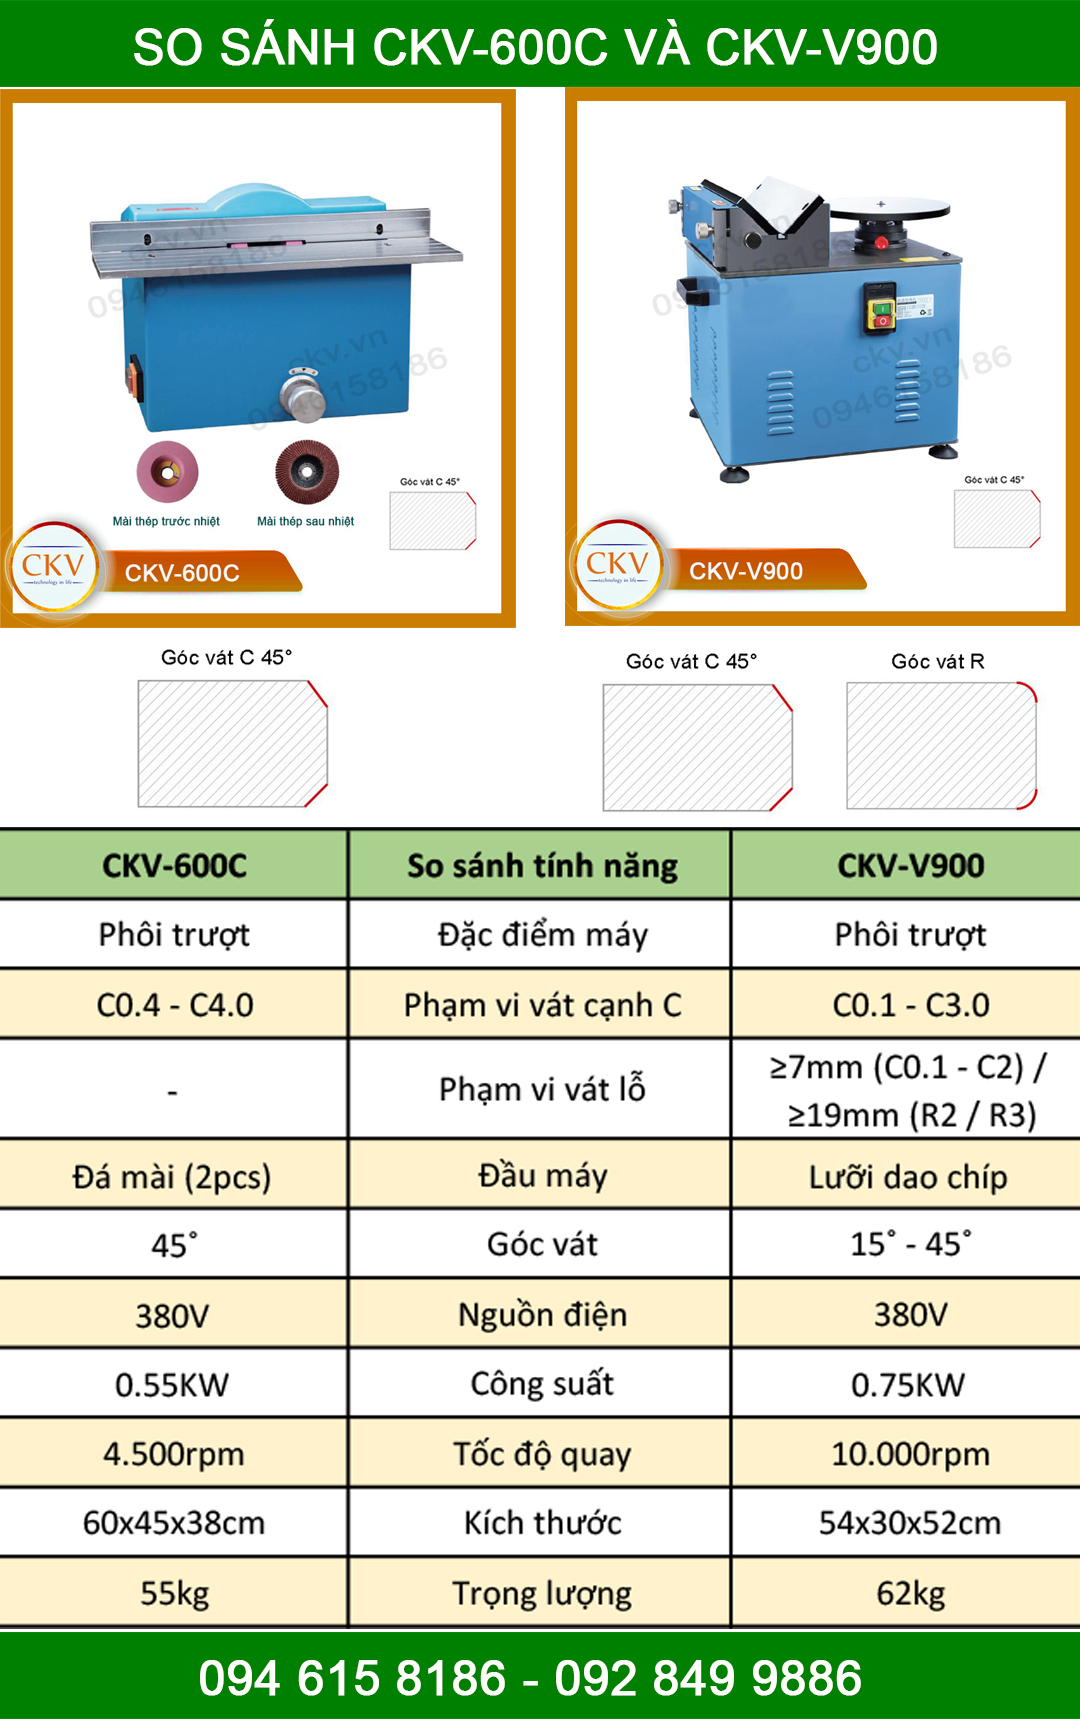 So sánh CKV-600C với CKV-V900